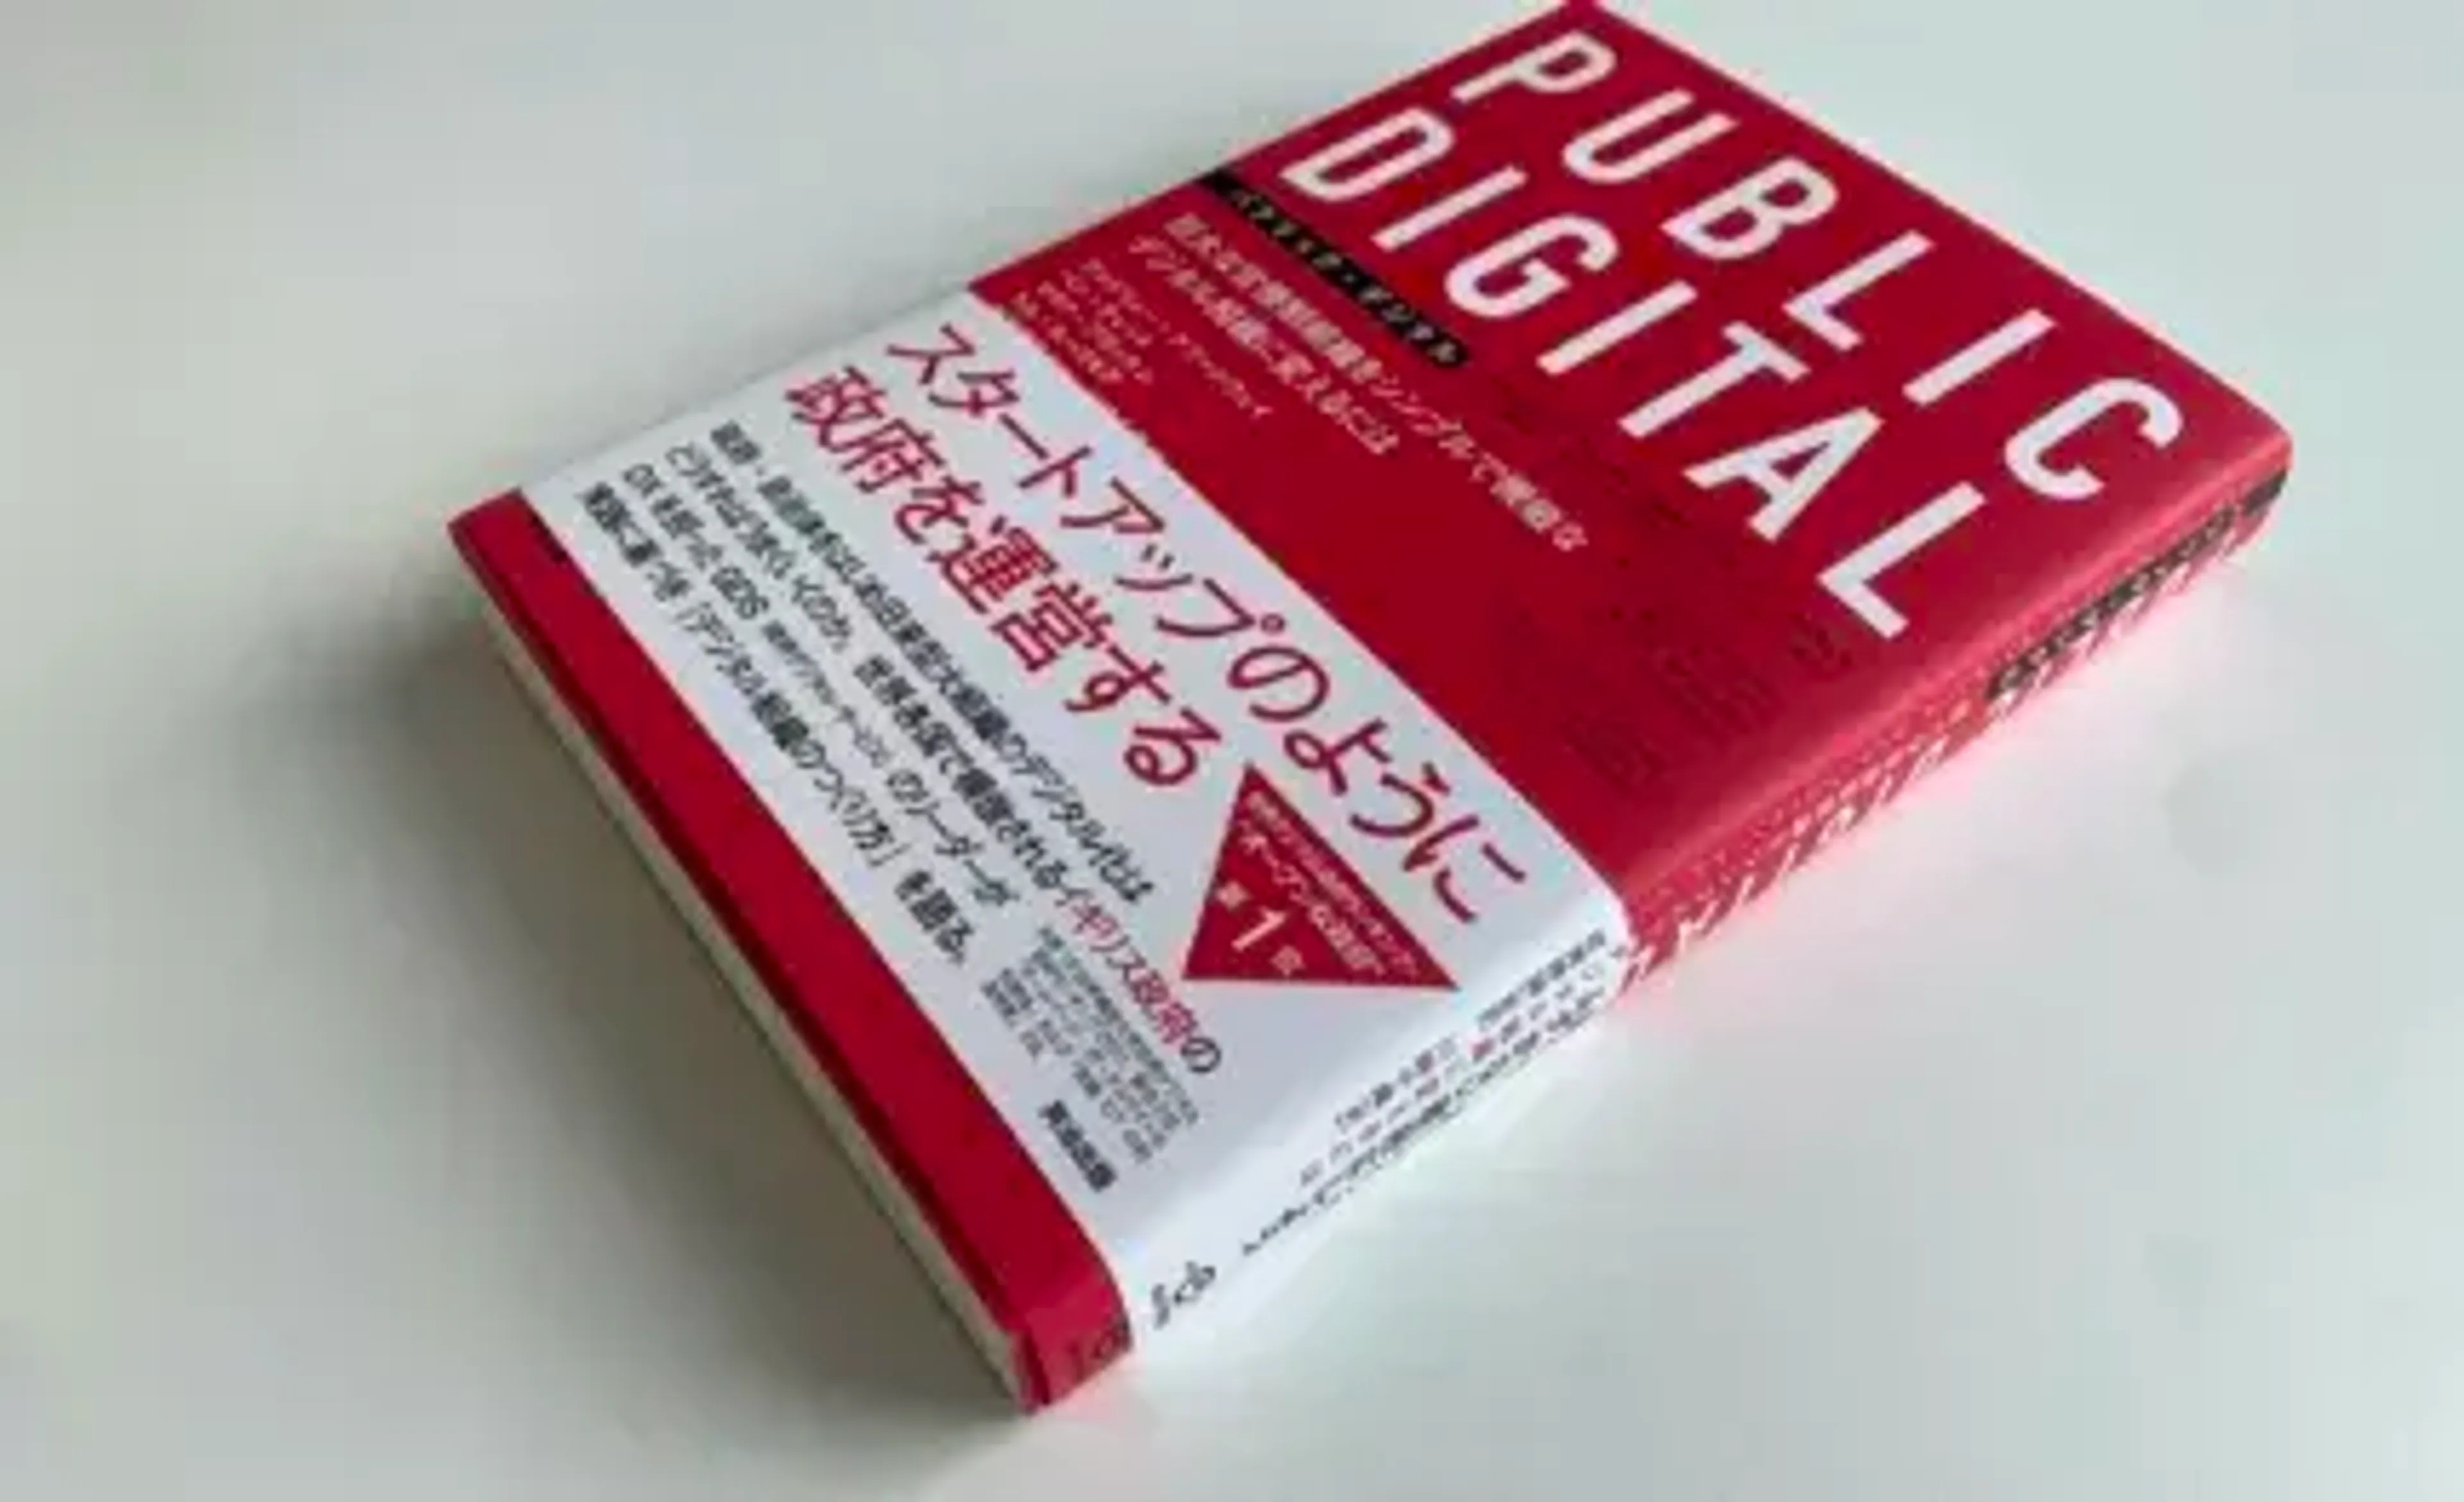 Public digital book in Japanese